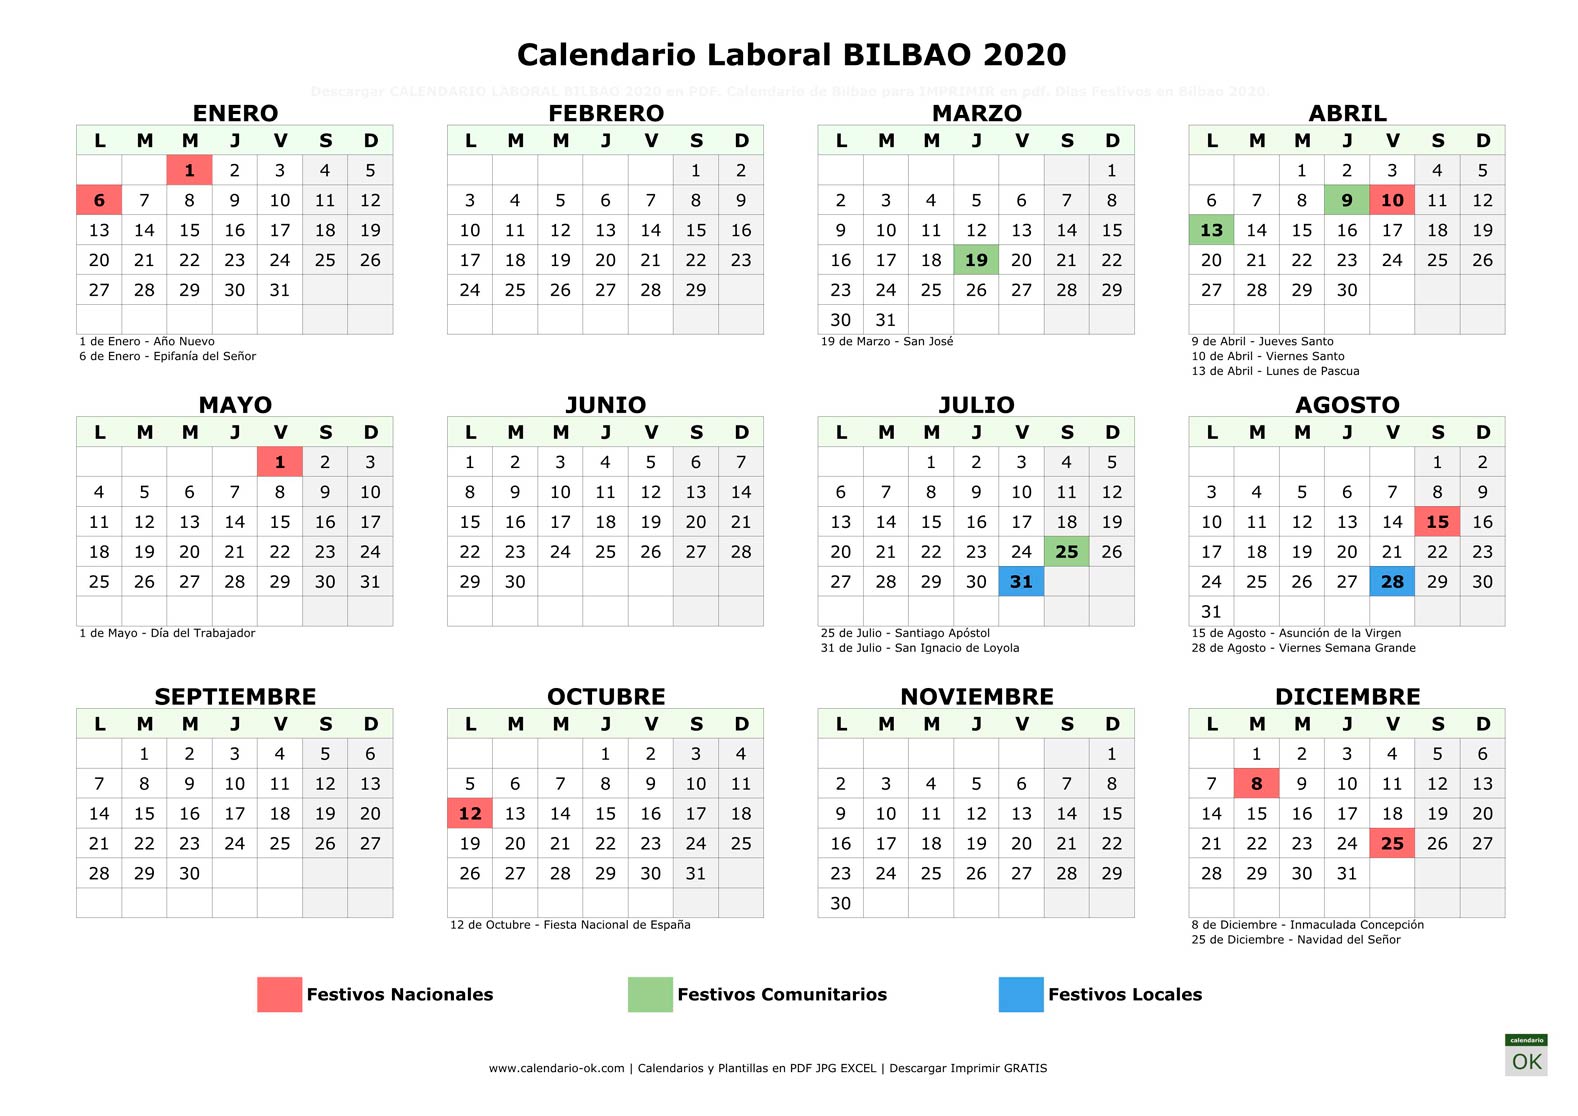 Calendario Laboral BILBAO 2020 horizontal